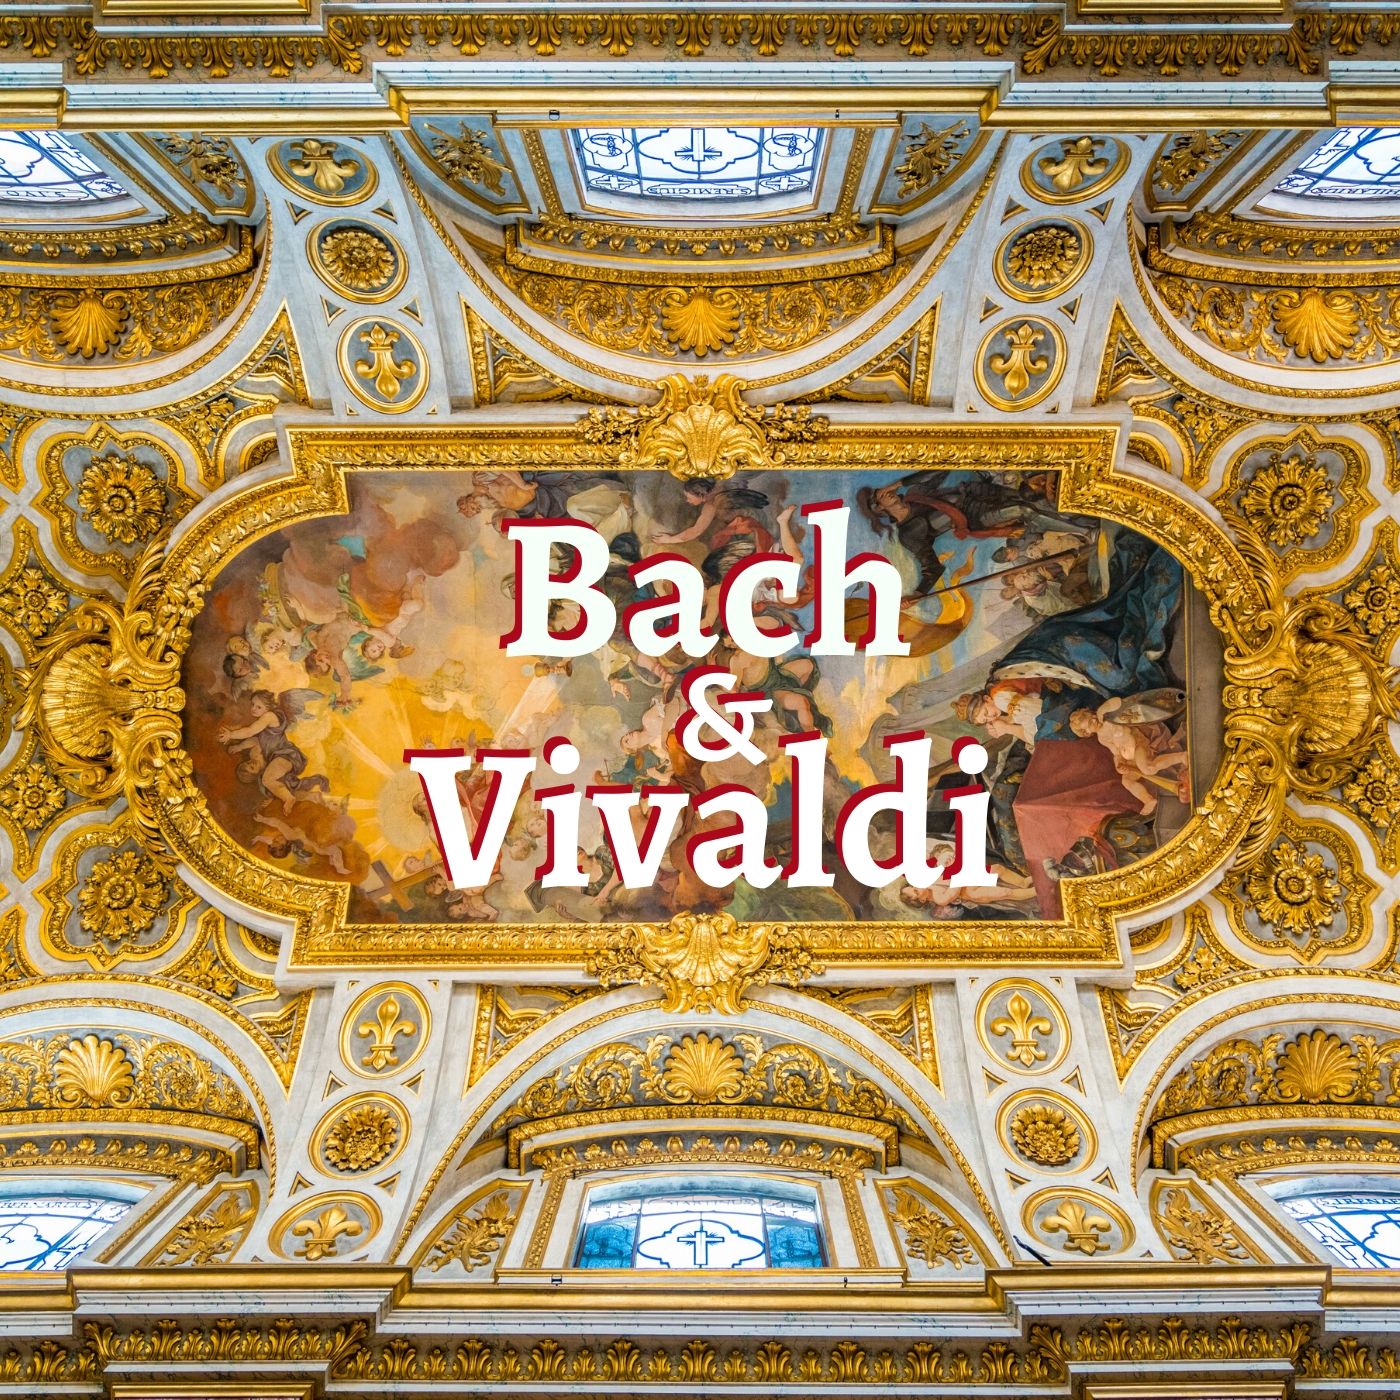 Bach & Vivaldi - The Best of Baroque Music